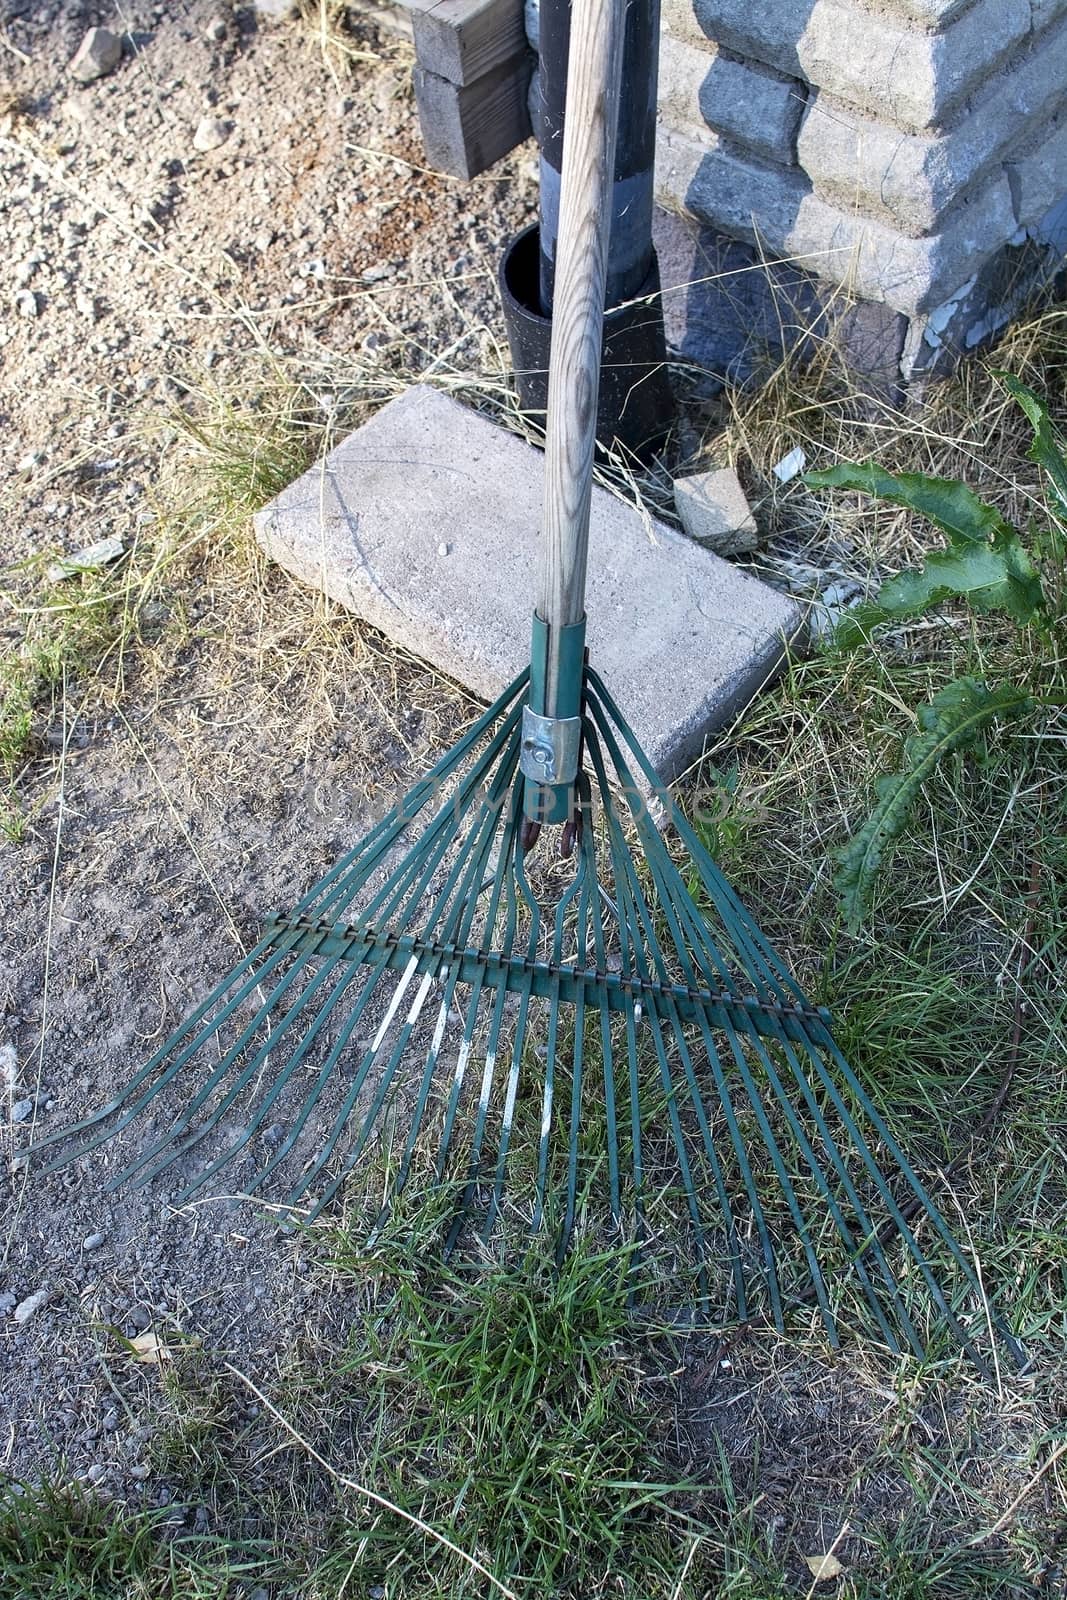 Green rake gardening equipment on bad lawn.